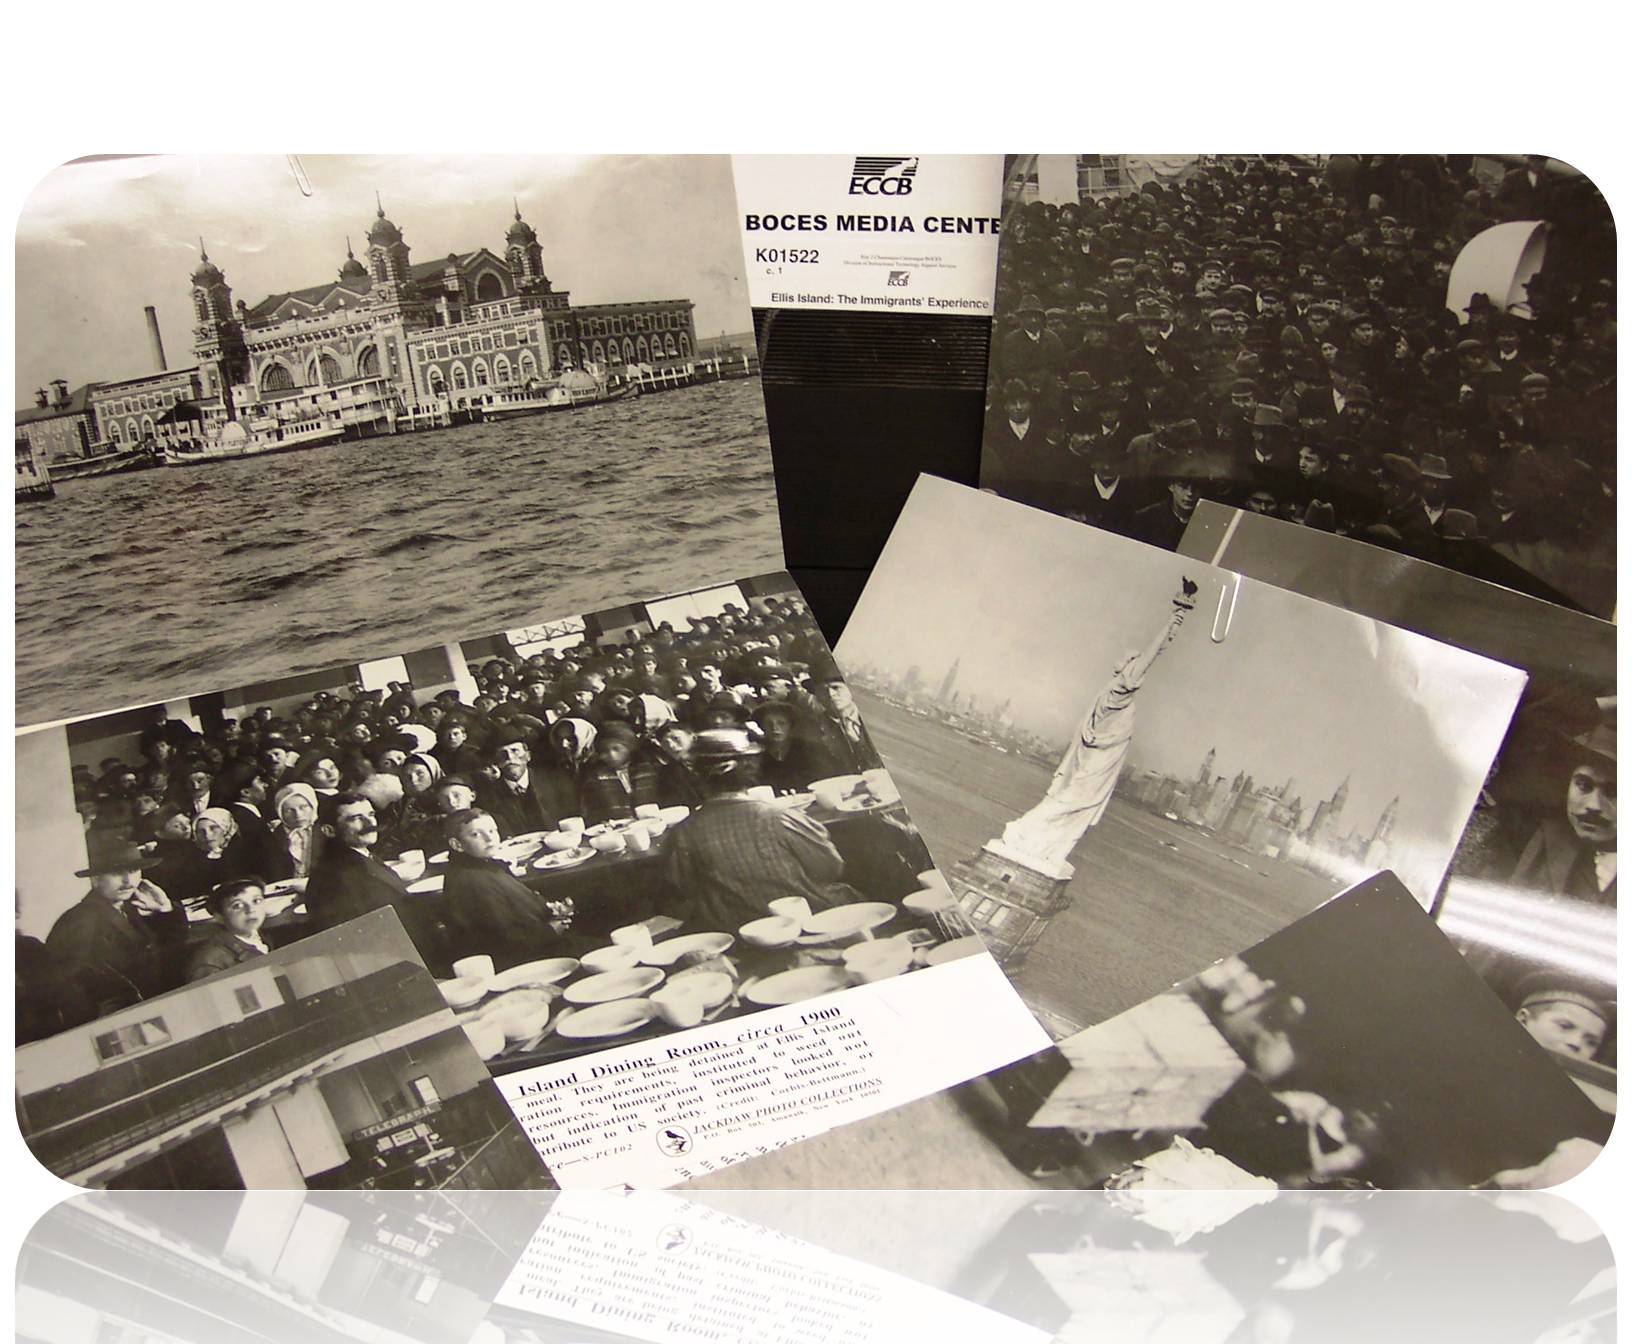 Ellis Island: The Immigrants' Experience